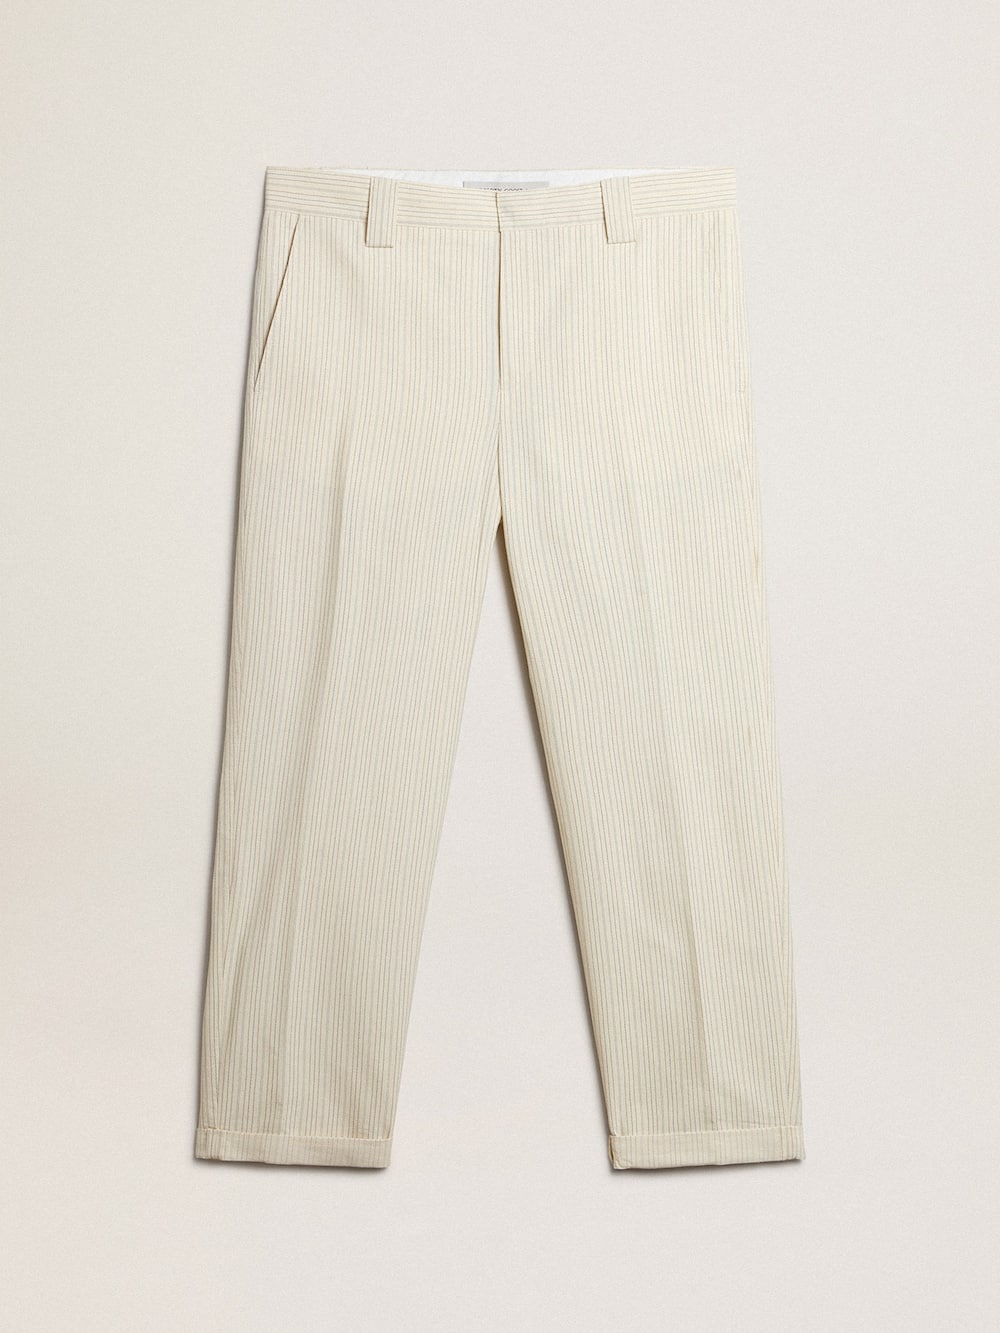 Golden Goose - Pantalone color panna da uomo in cotone a righe in 